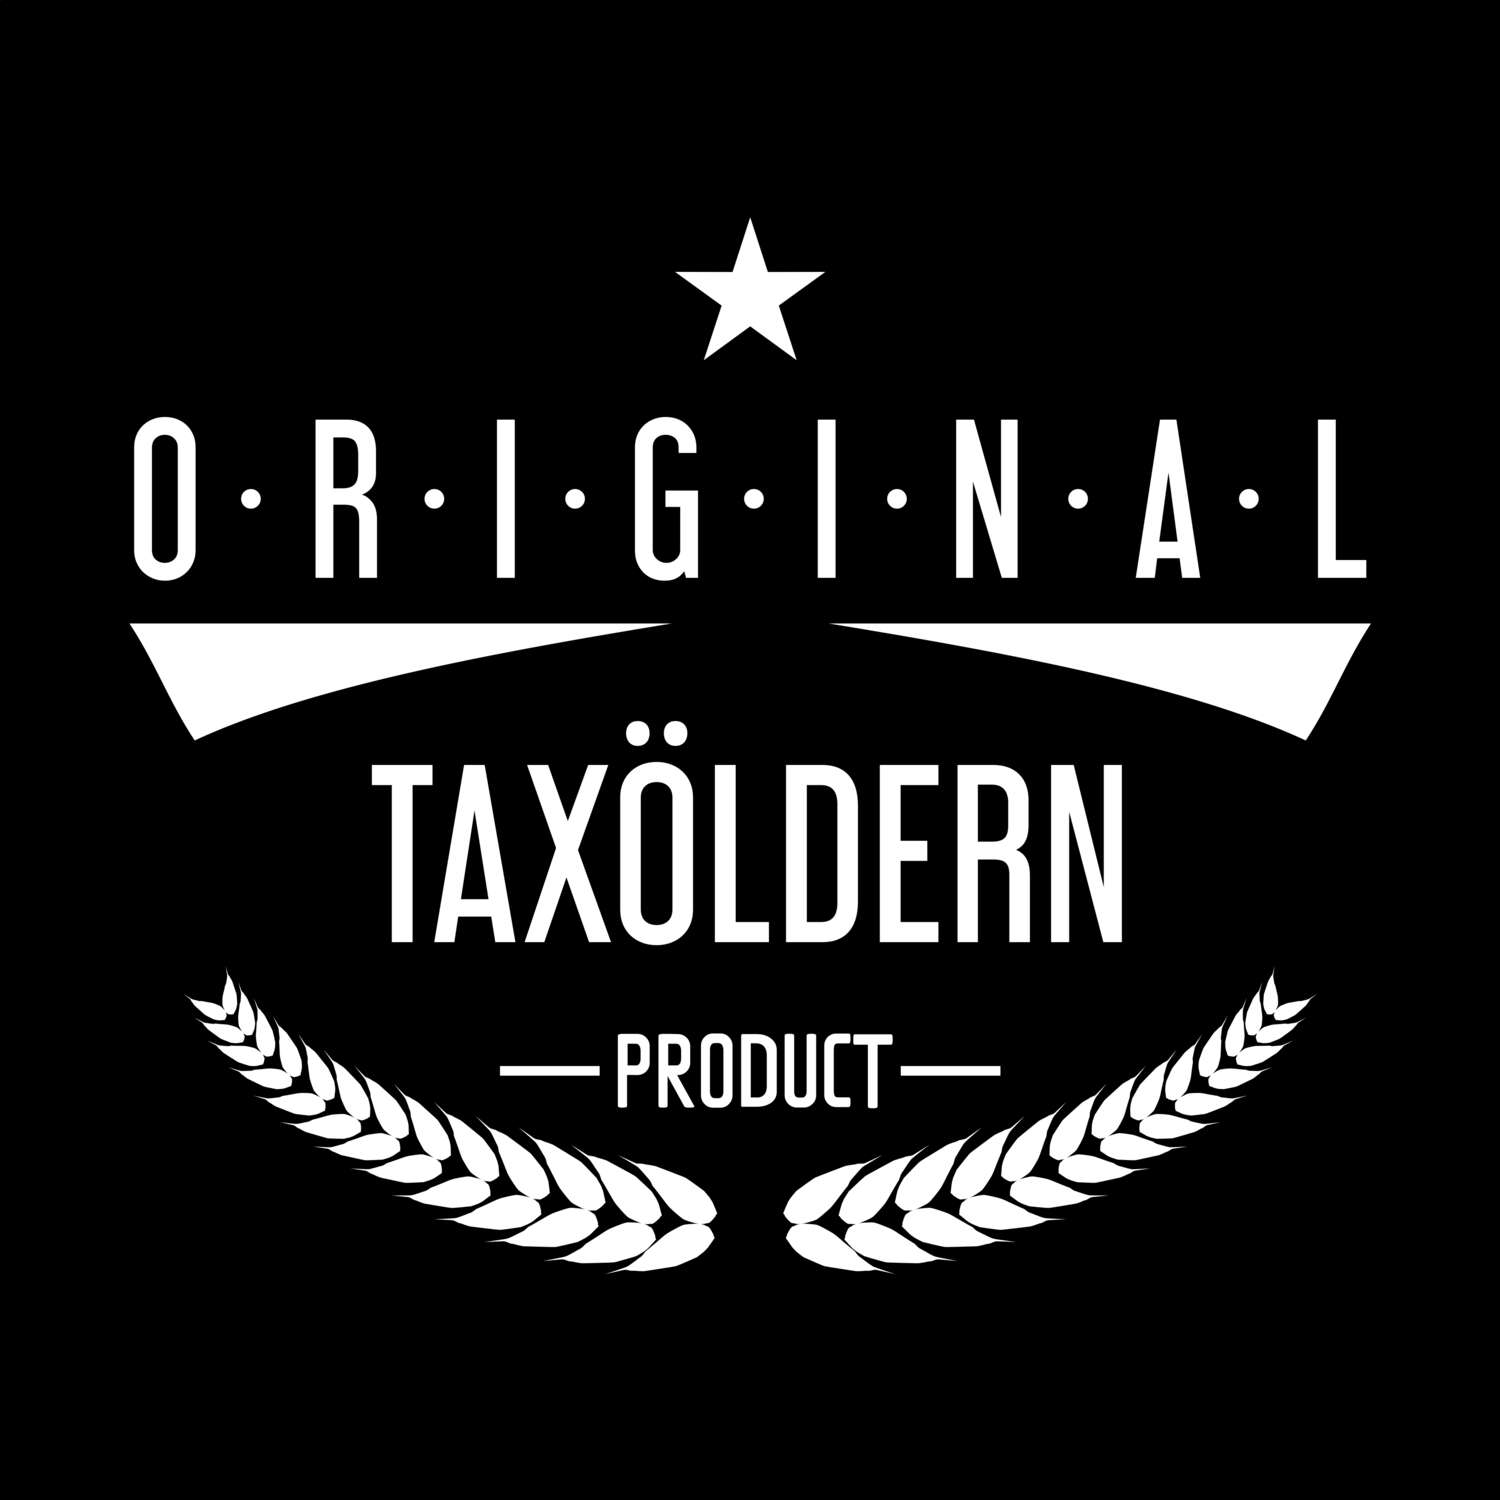 Taxöldern T-Shirt »Original Product«